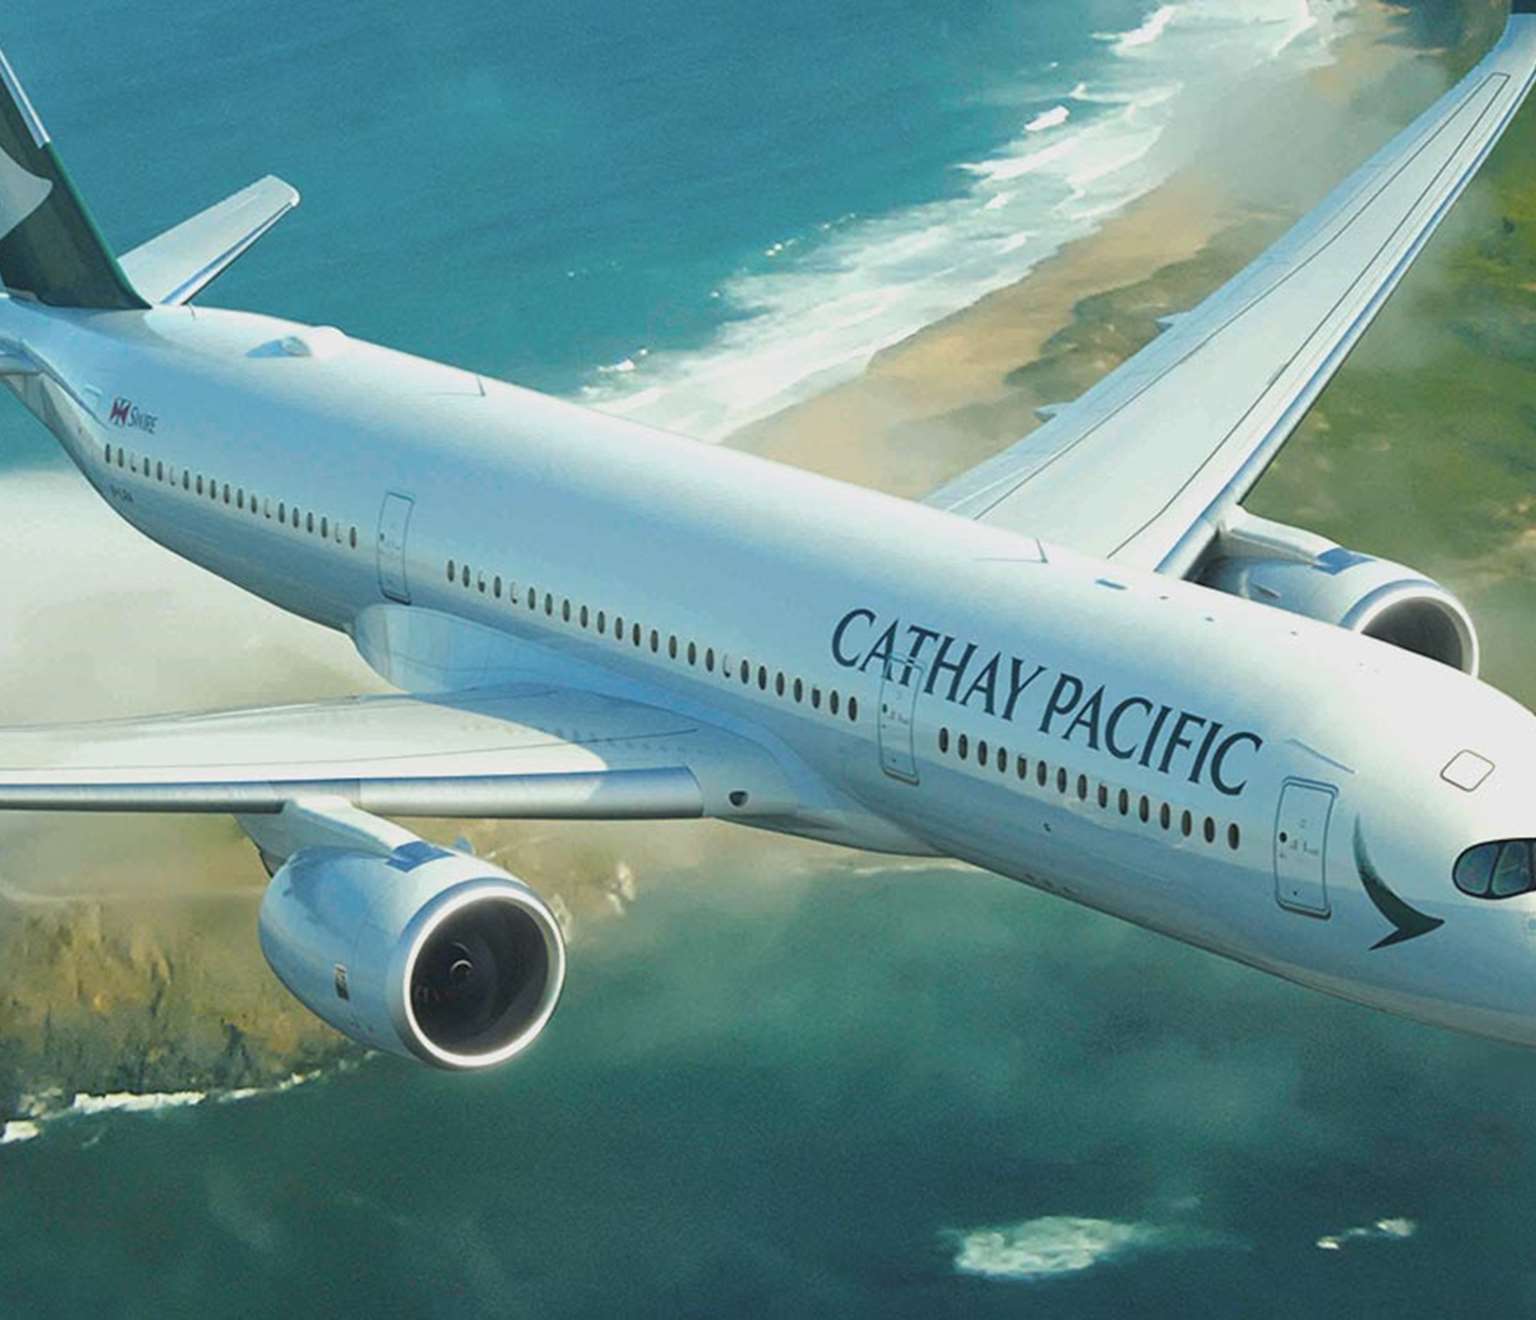 Cathay Pacific flights Netflights